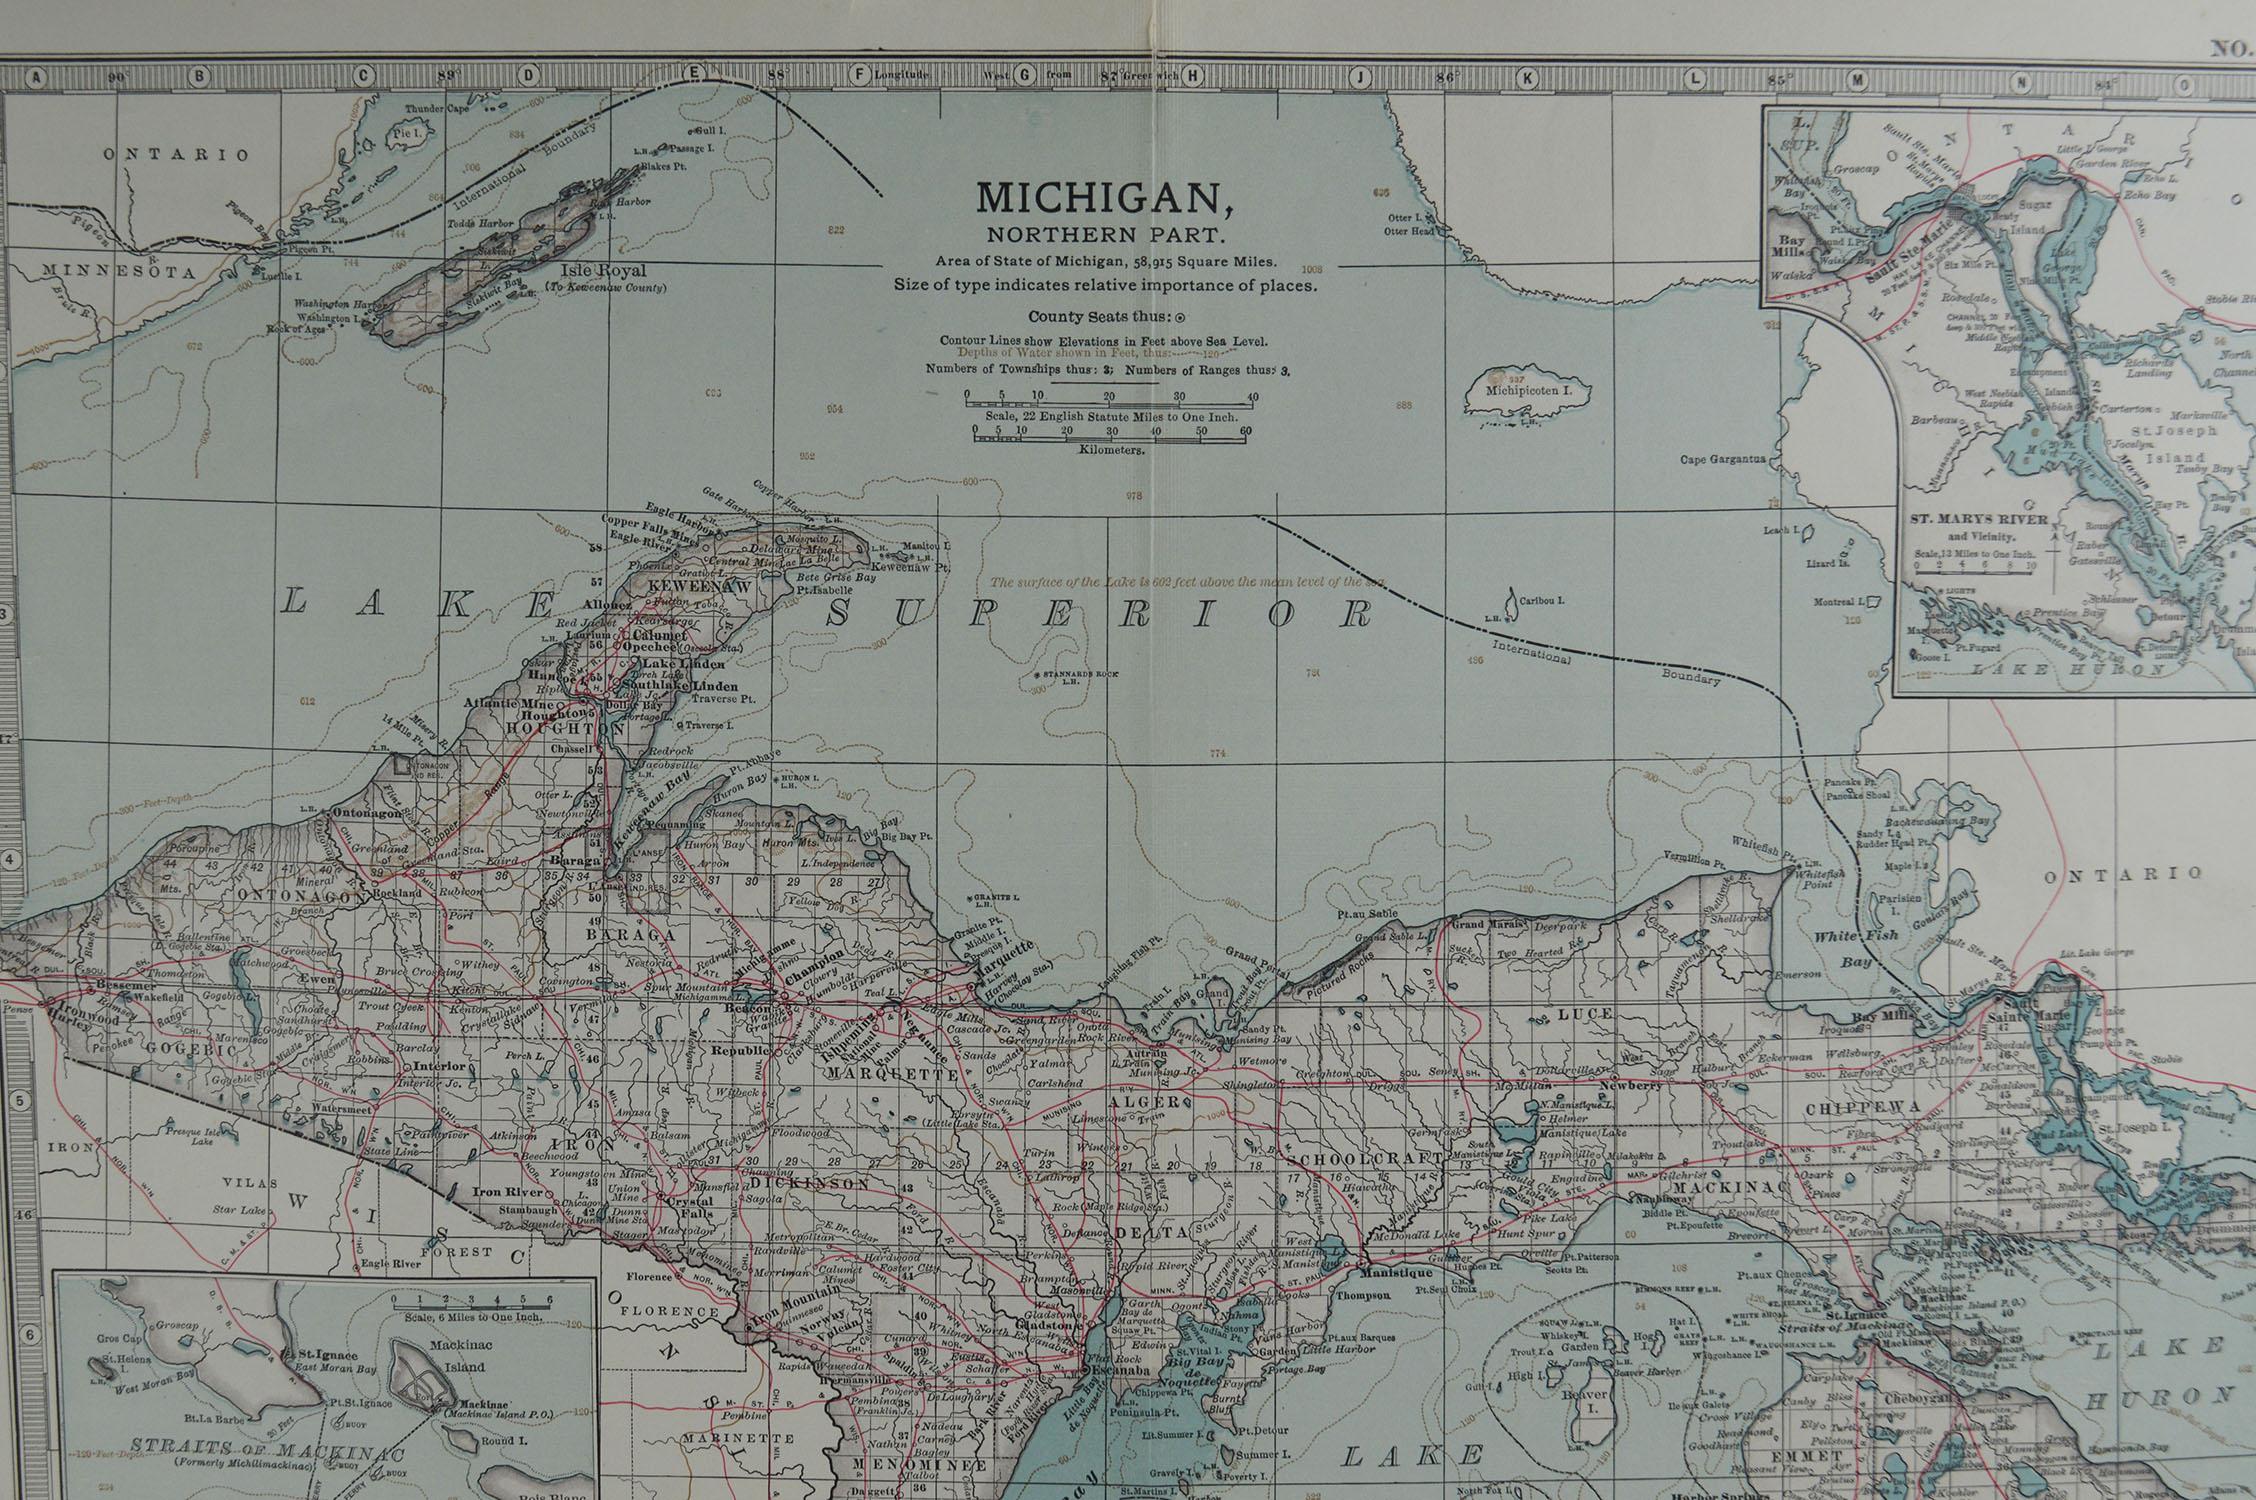 Other Original Antique Map of Michigan, circa 1890